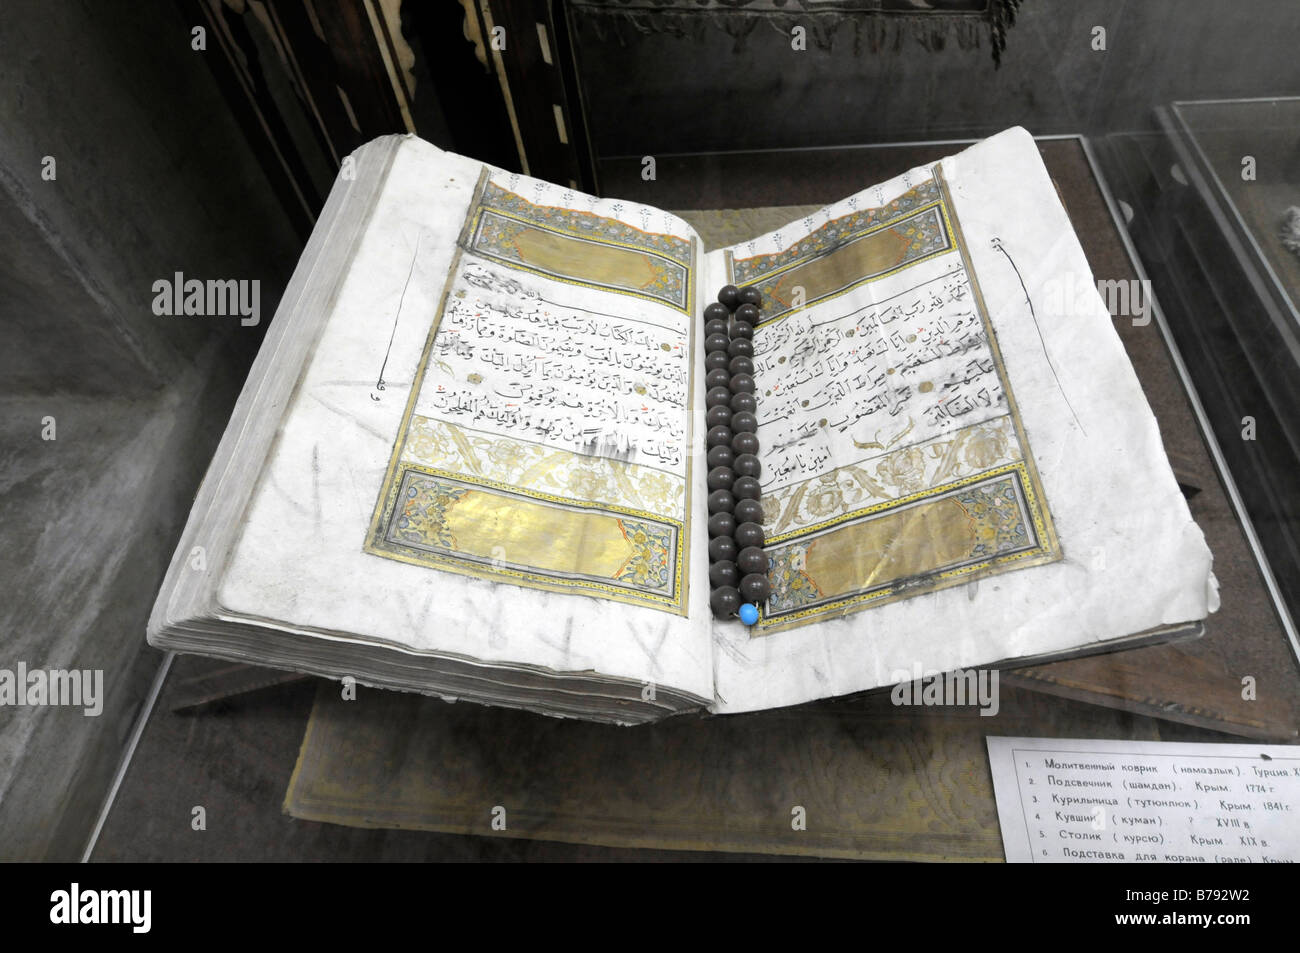 A medieval Koran on display inside the former Palace of the Crimean Khans in Bakhchisaray, Crimea, Ukraine Stock Photo